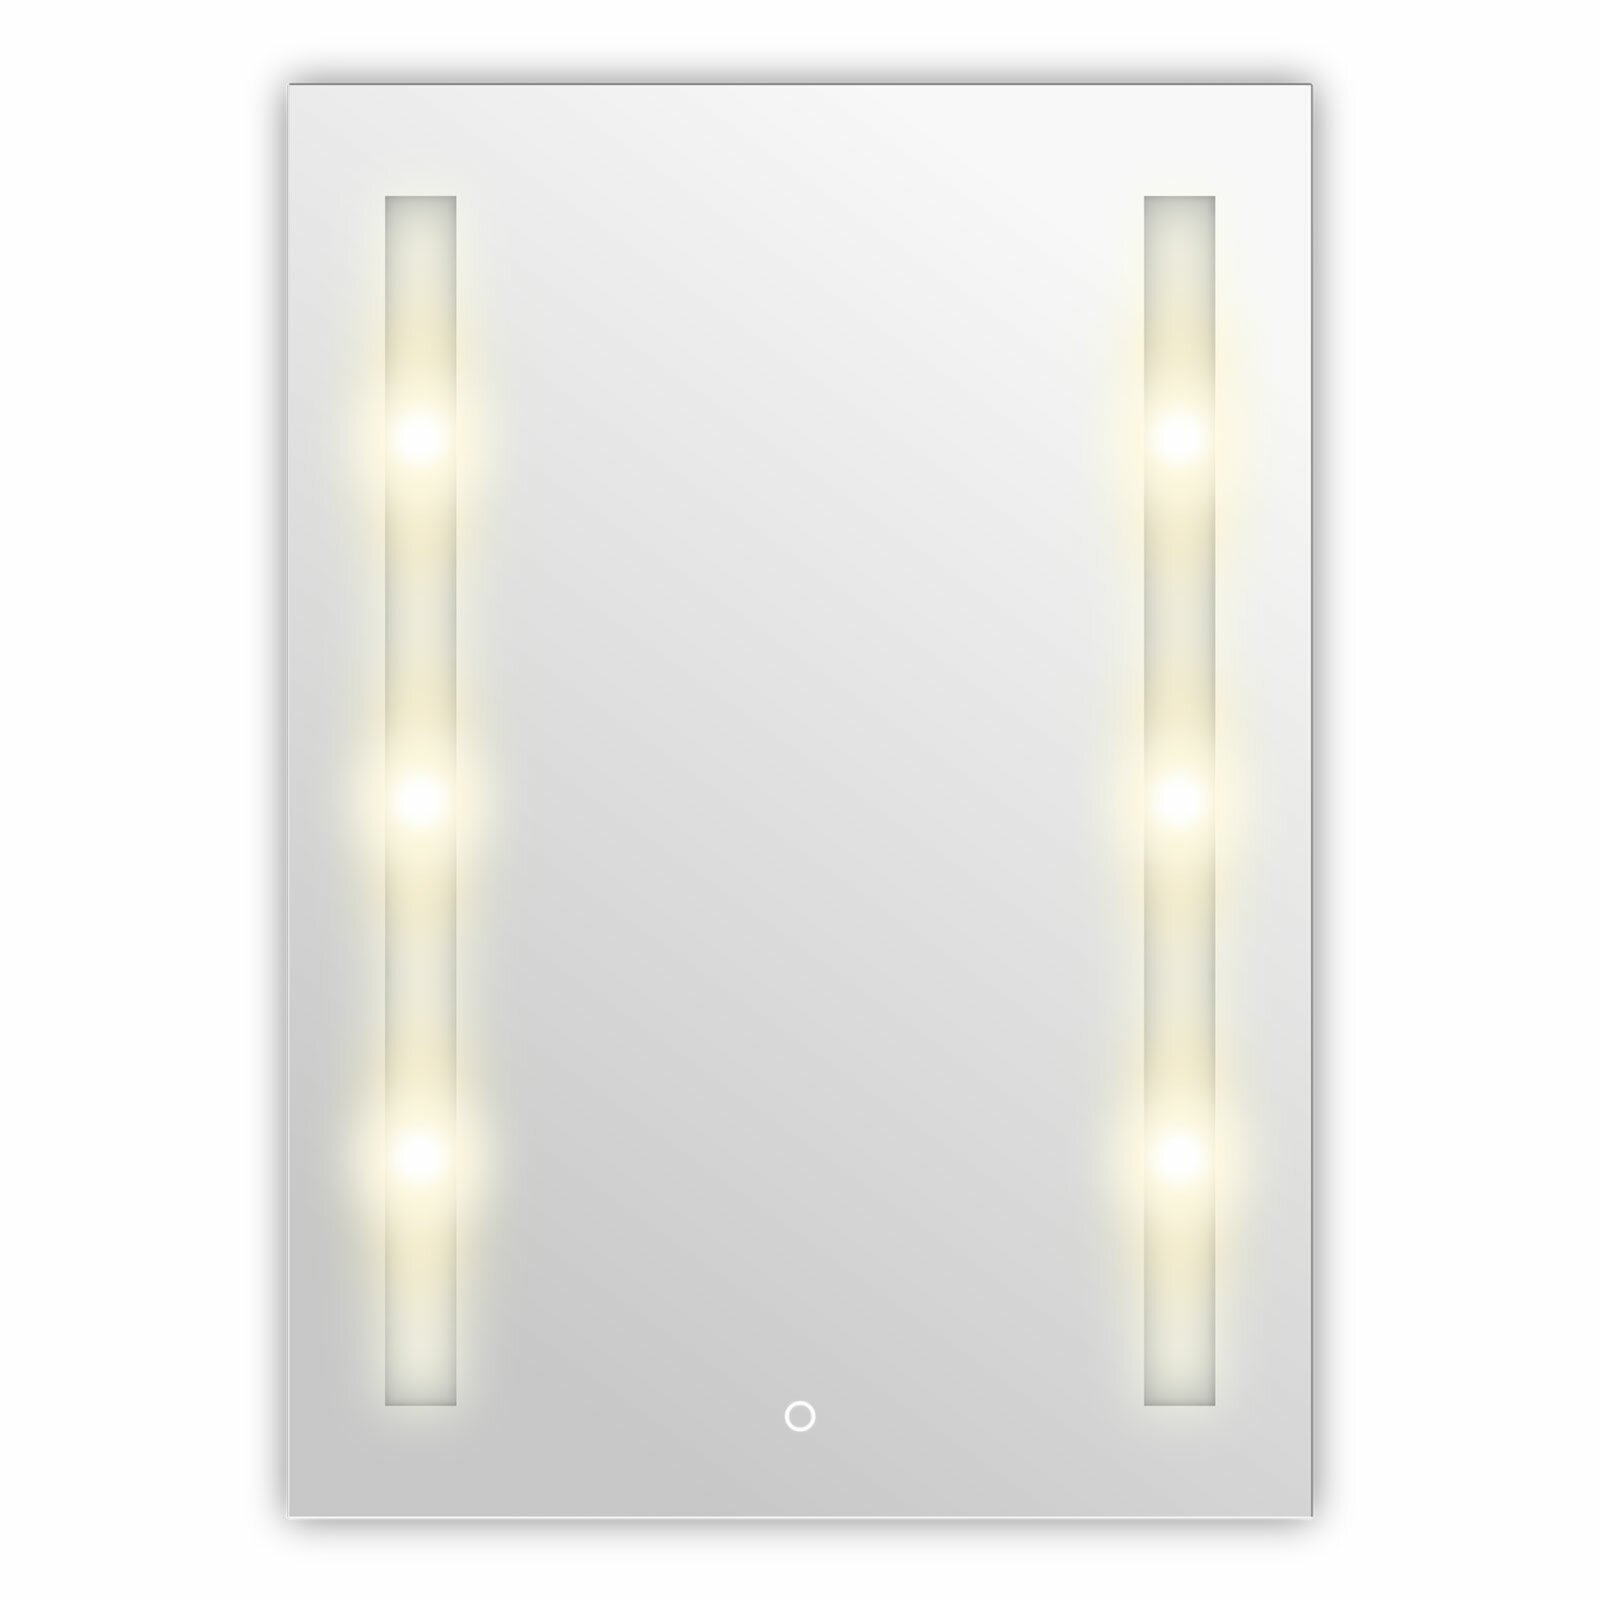 LED-Spiegel - Touch-Sensor - 50x70 cm | Online bei ROLLER kaufen